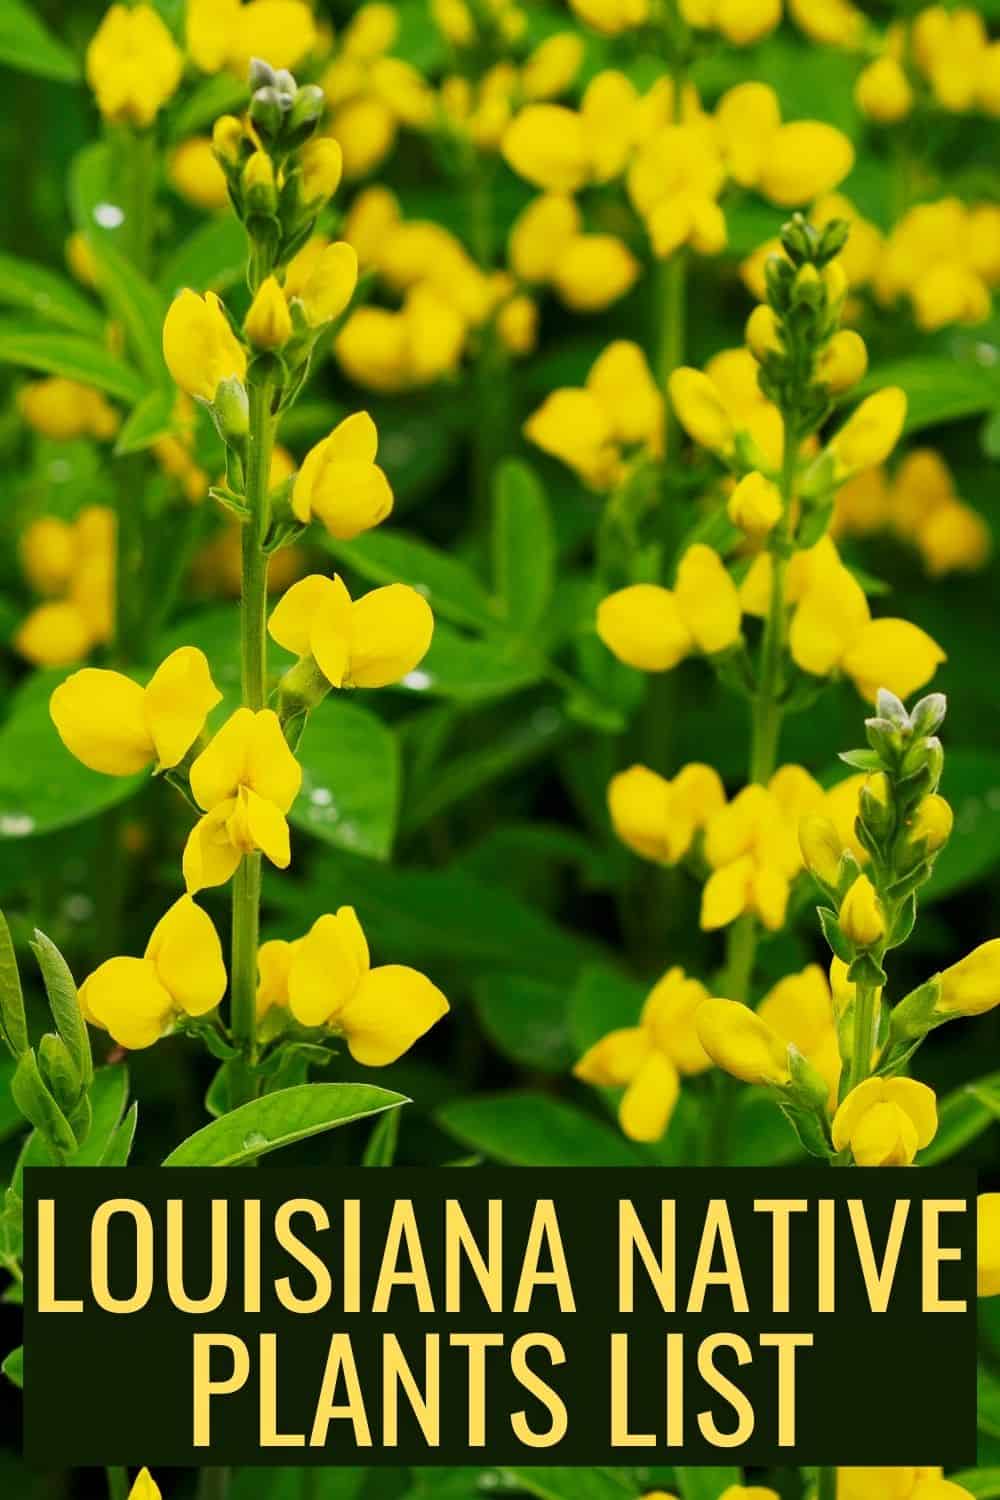 Louisiana native plants list